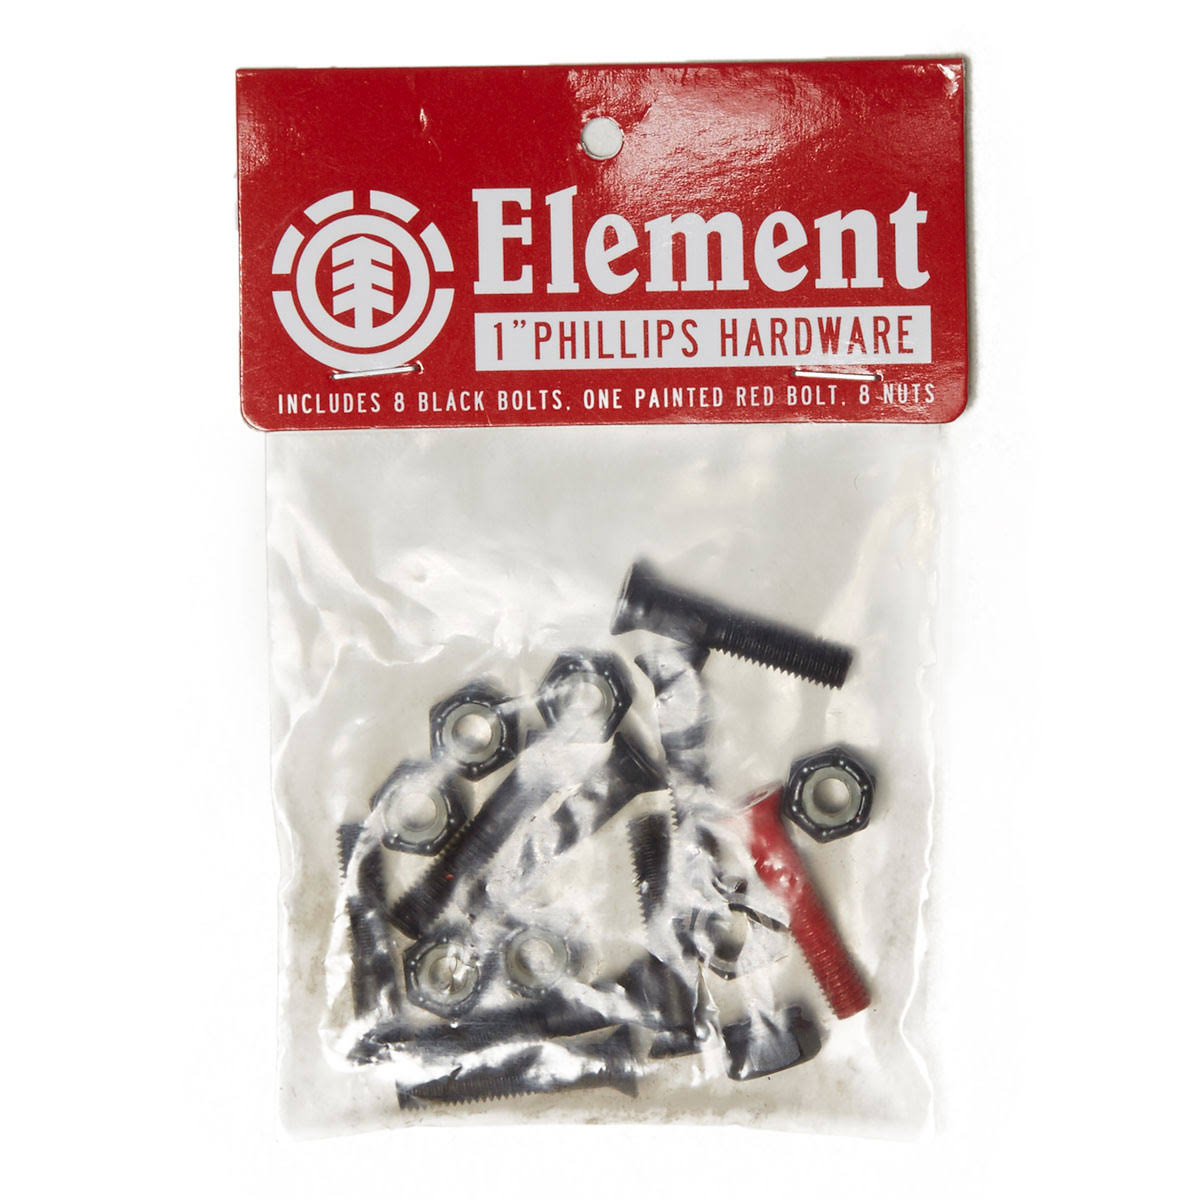 Element 1" Phillips Hardware